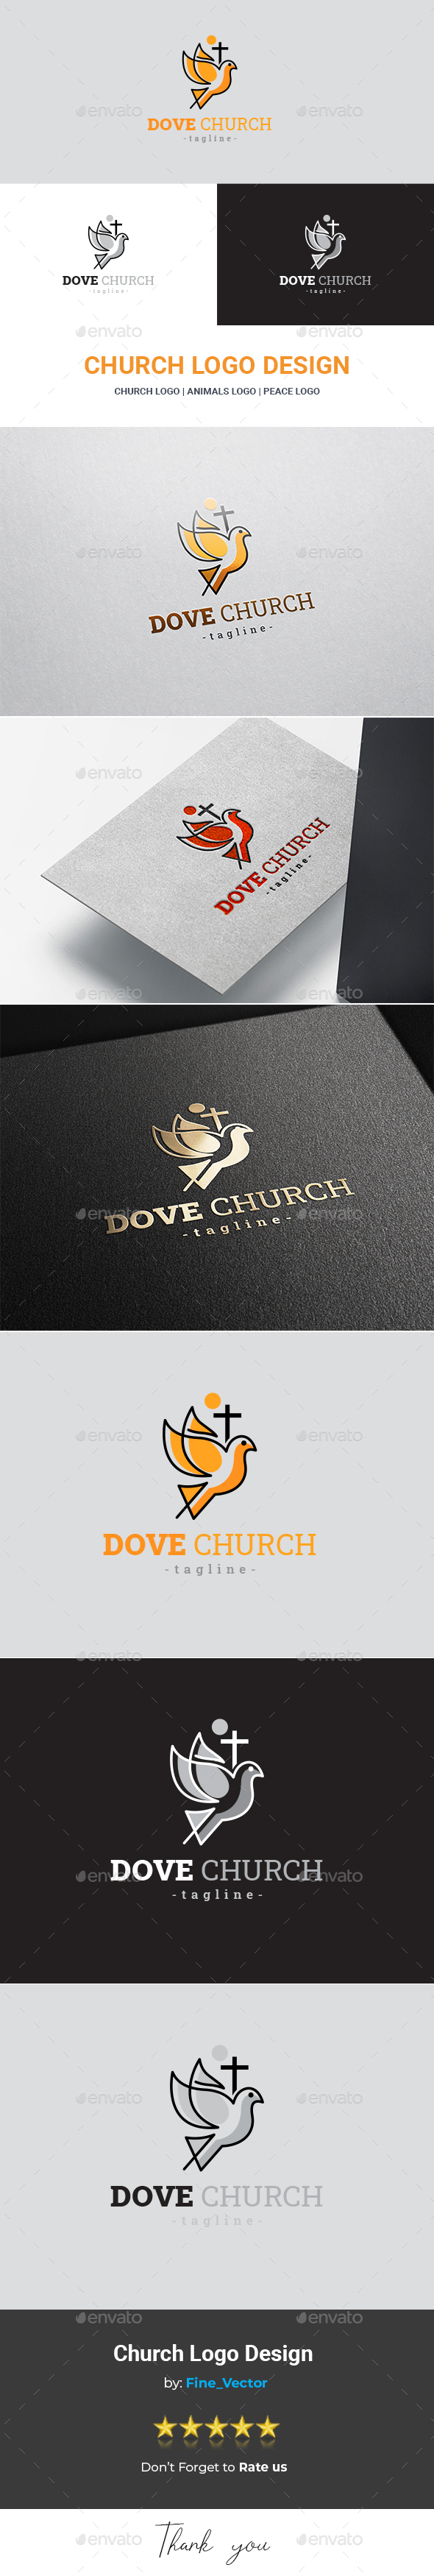 Dove Church Logo Design Template